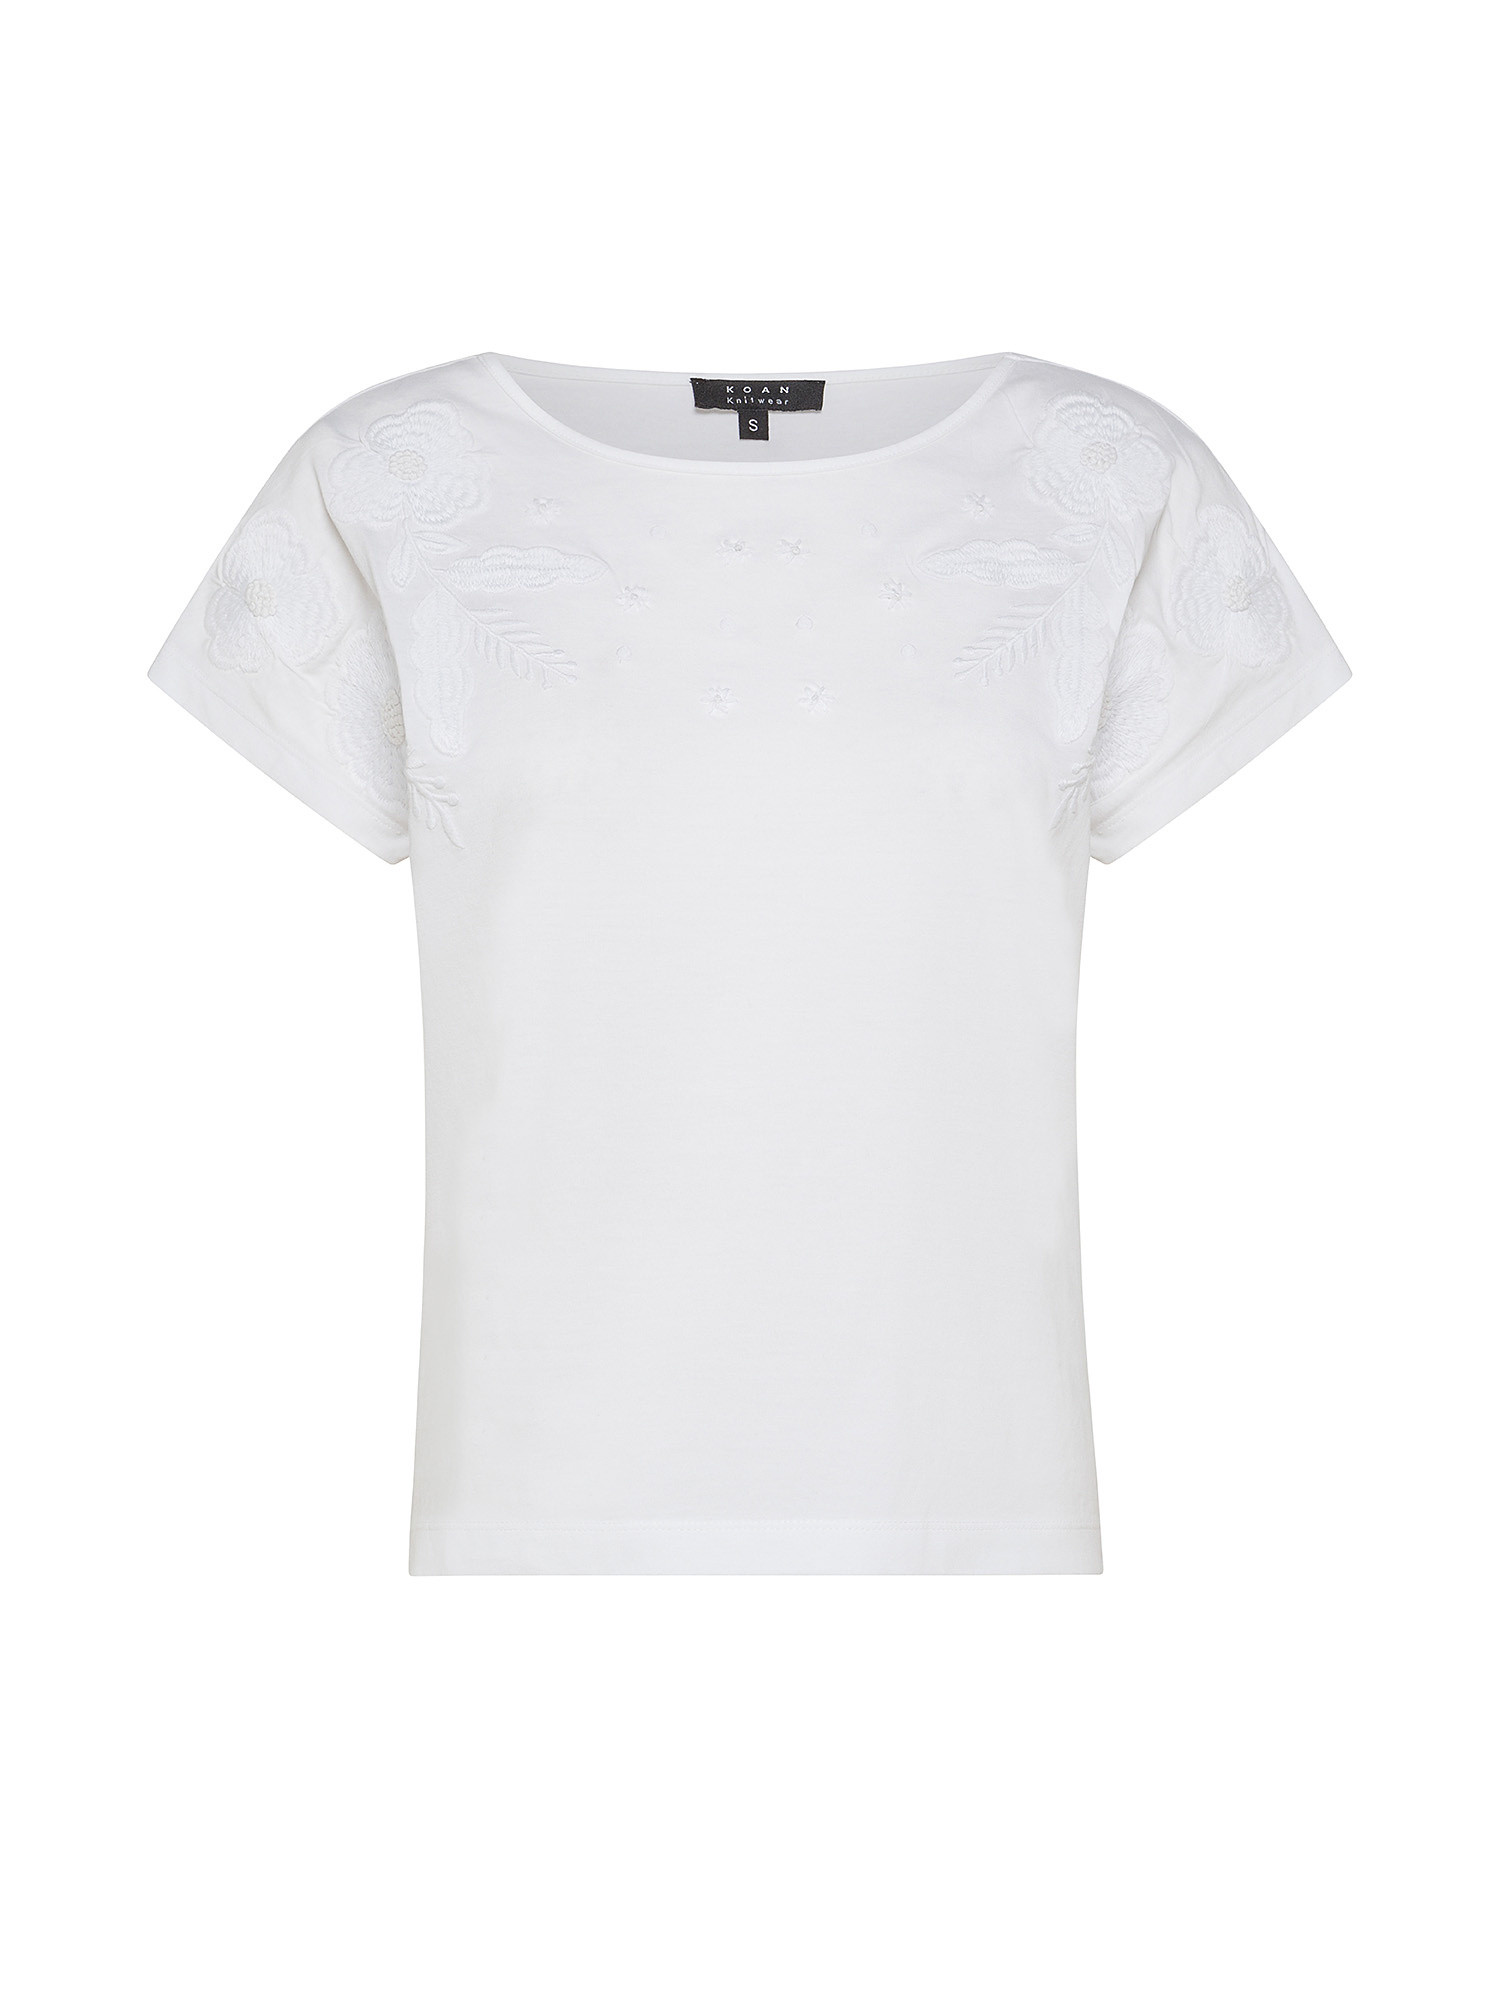 Koan - T-shirt con ricamo, Bianco, large image number 0